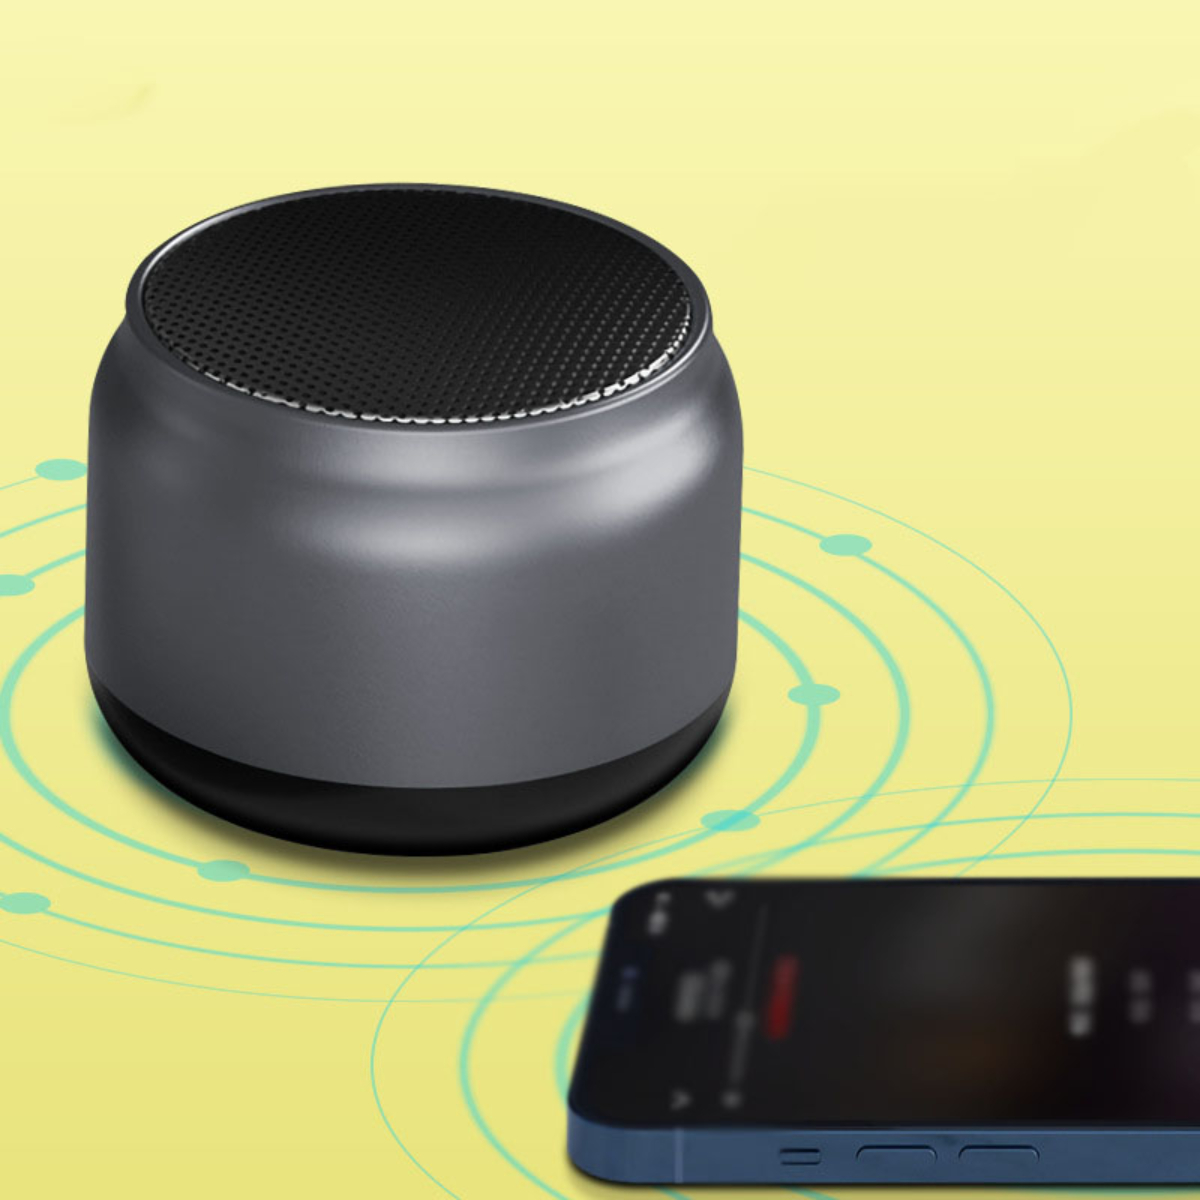 BYTELIKE Bluetooth-Mini-Metall-Lautsprecher, Subwoofer, Bluetooth-Lautsprecher, Langlebigkeit, Kompakt und Tragbar Blau